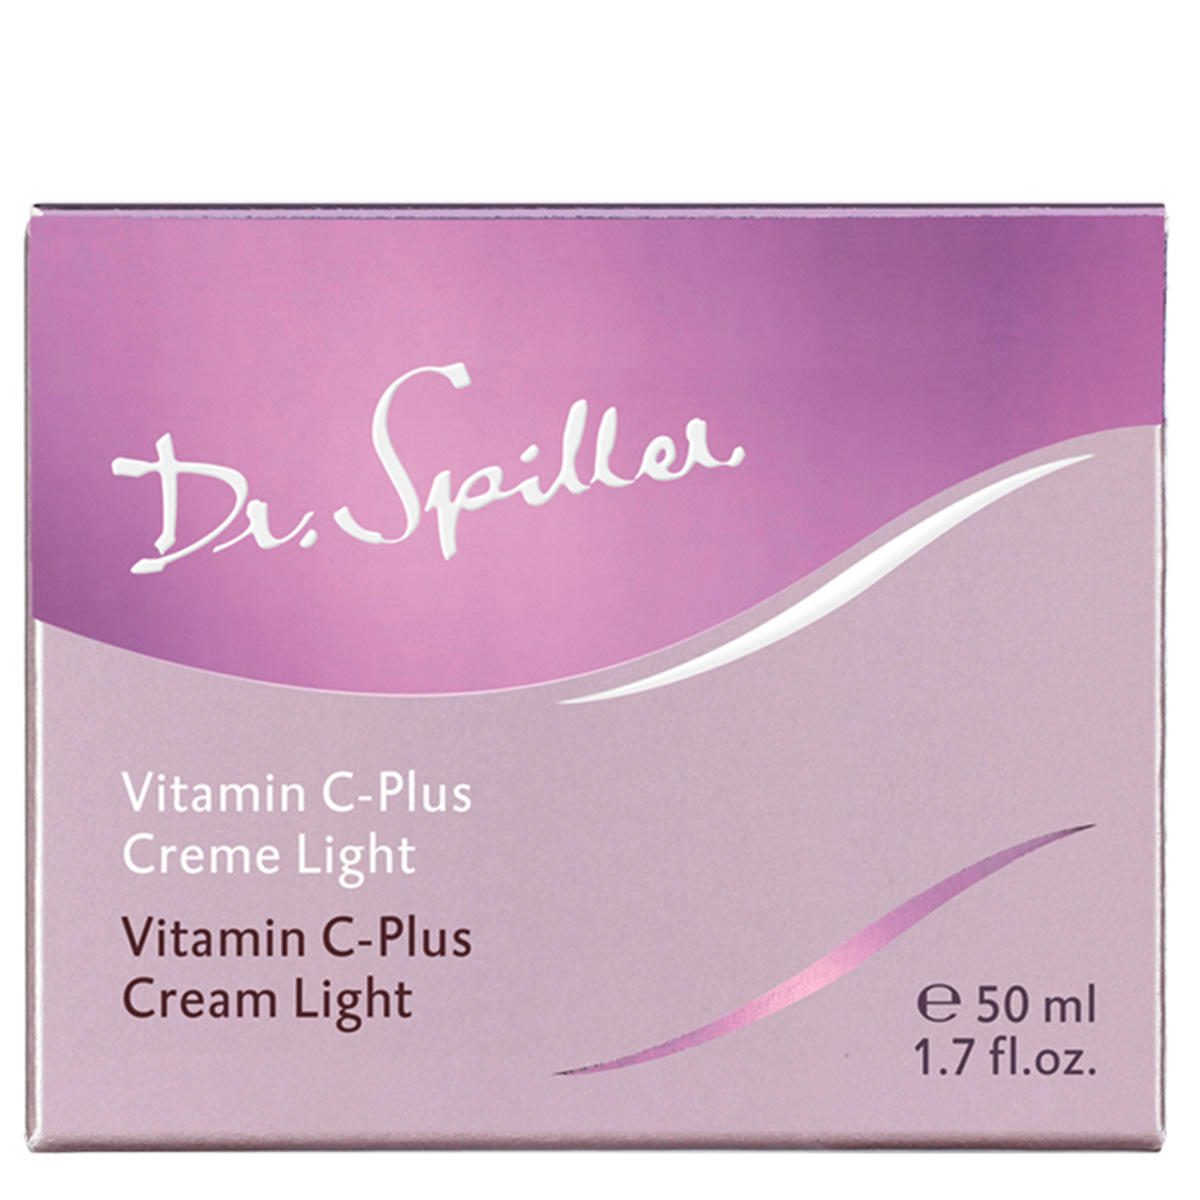 Dr. Spiller Biomimetic SkinCare Vitamin C-Plus Creme Light 50 ml - 3